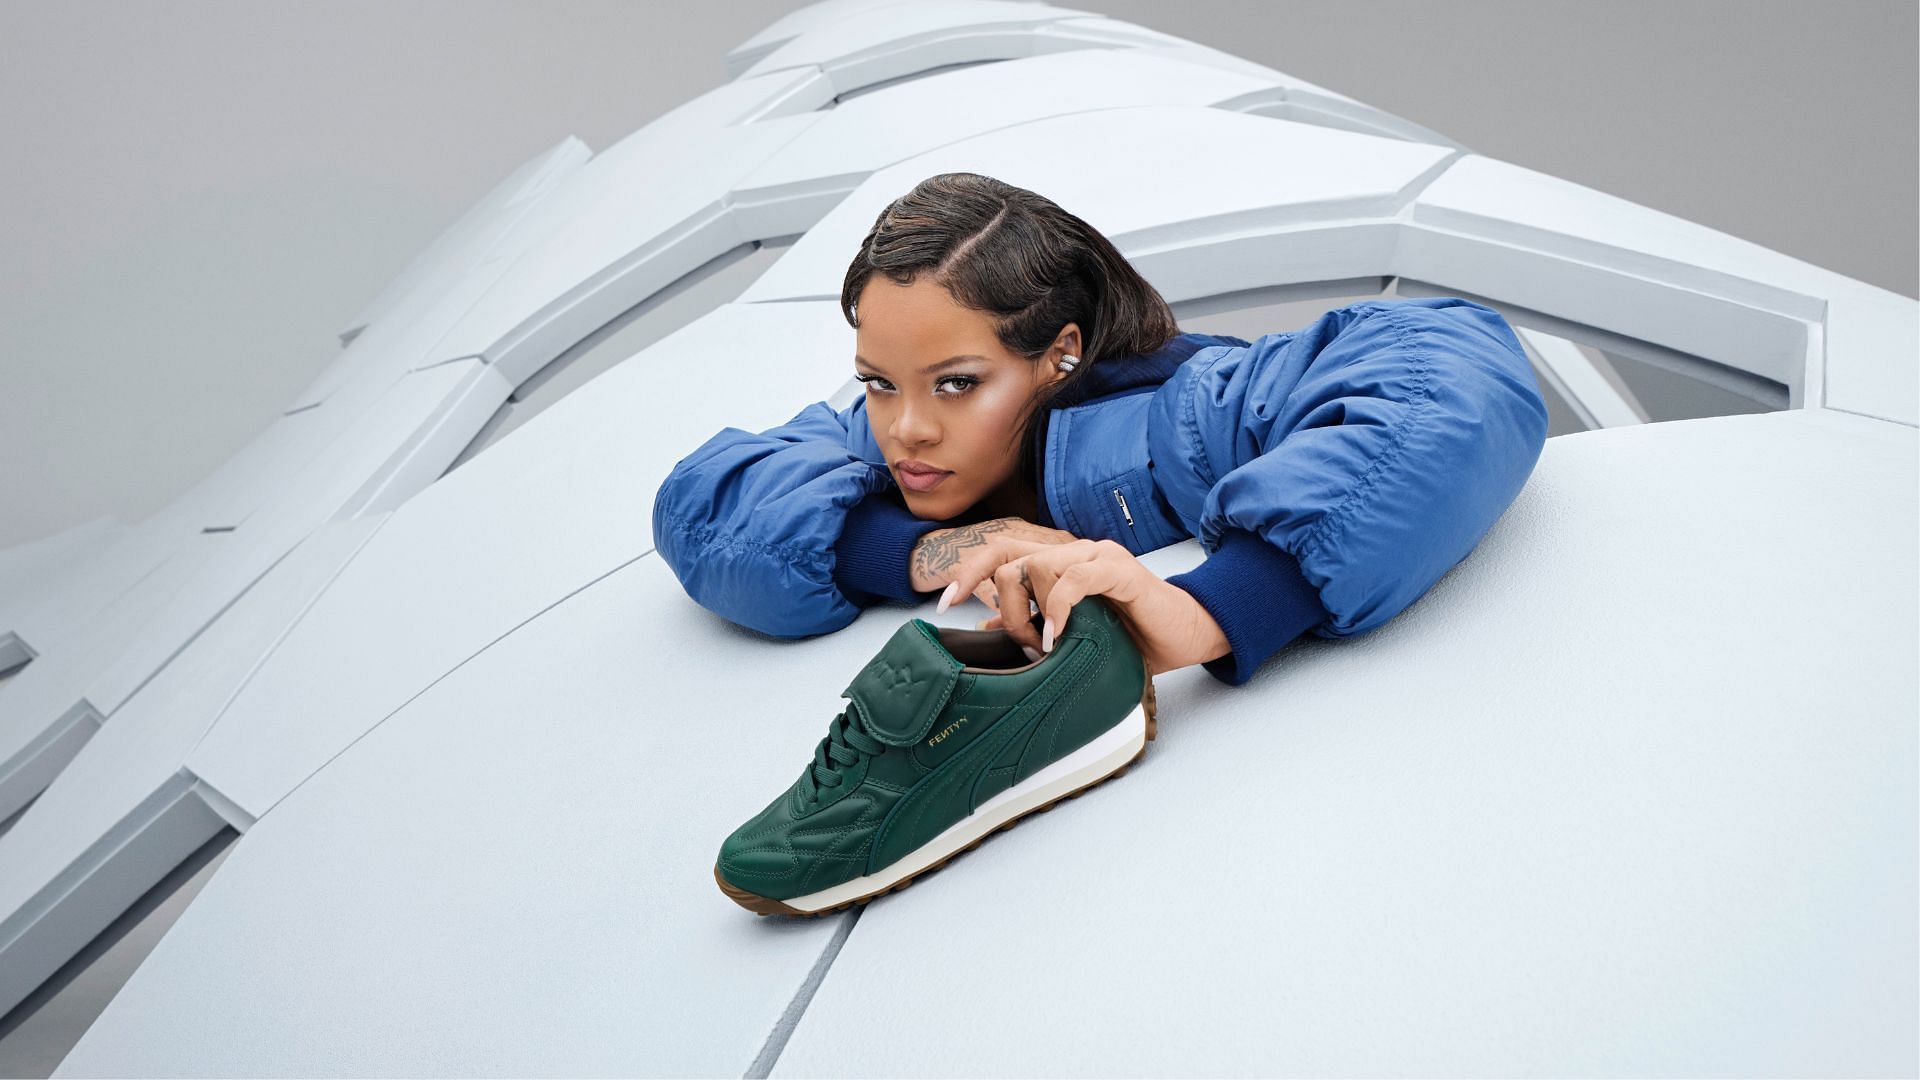 Rihanna x FENTY x PUMA Avanti latest sneaker colorways